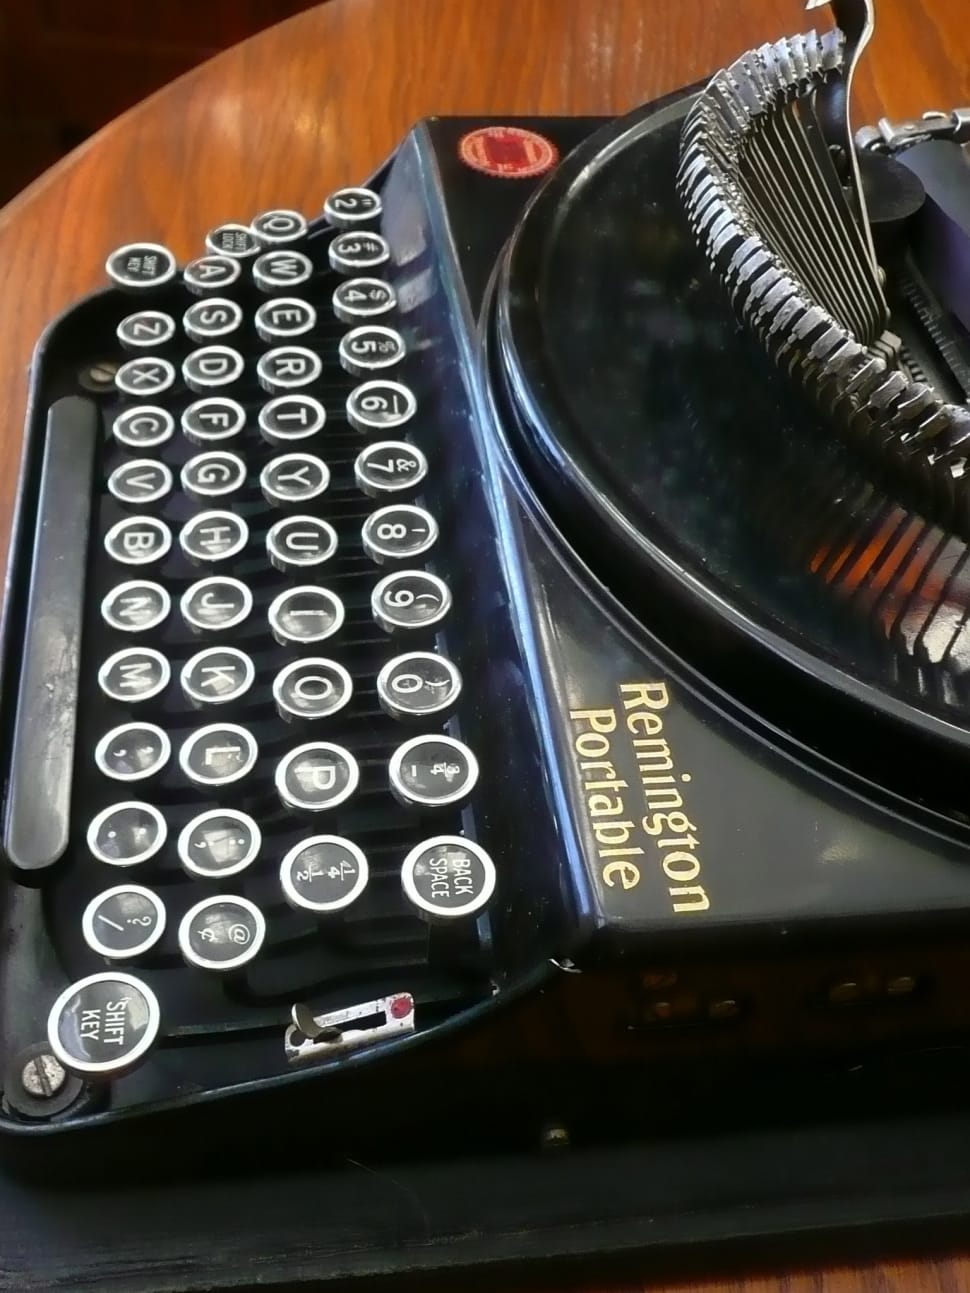 black remington portable type writer preview